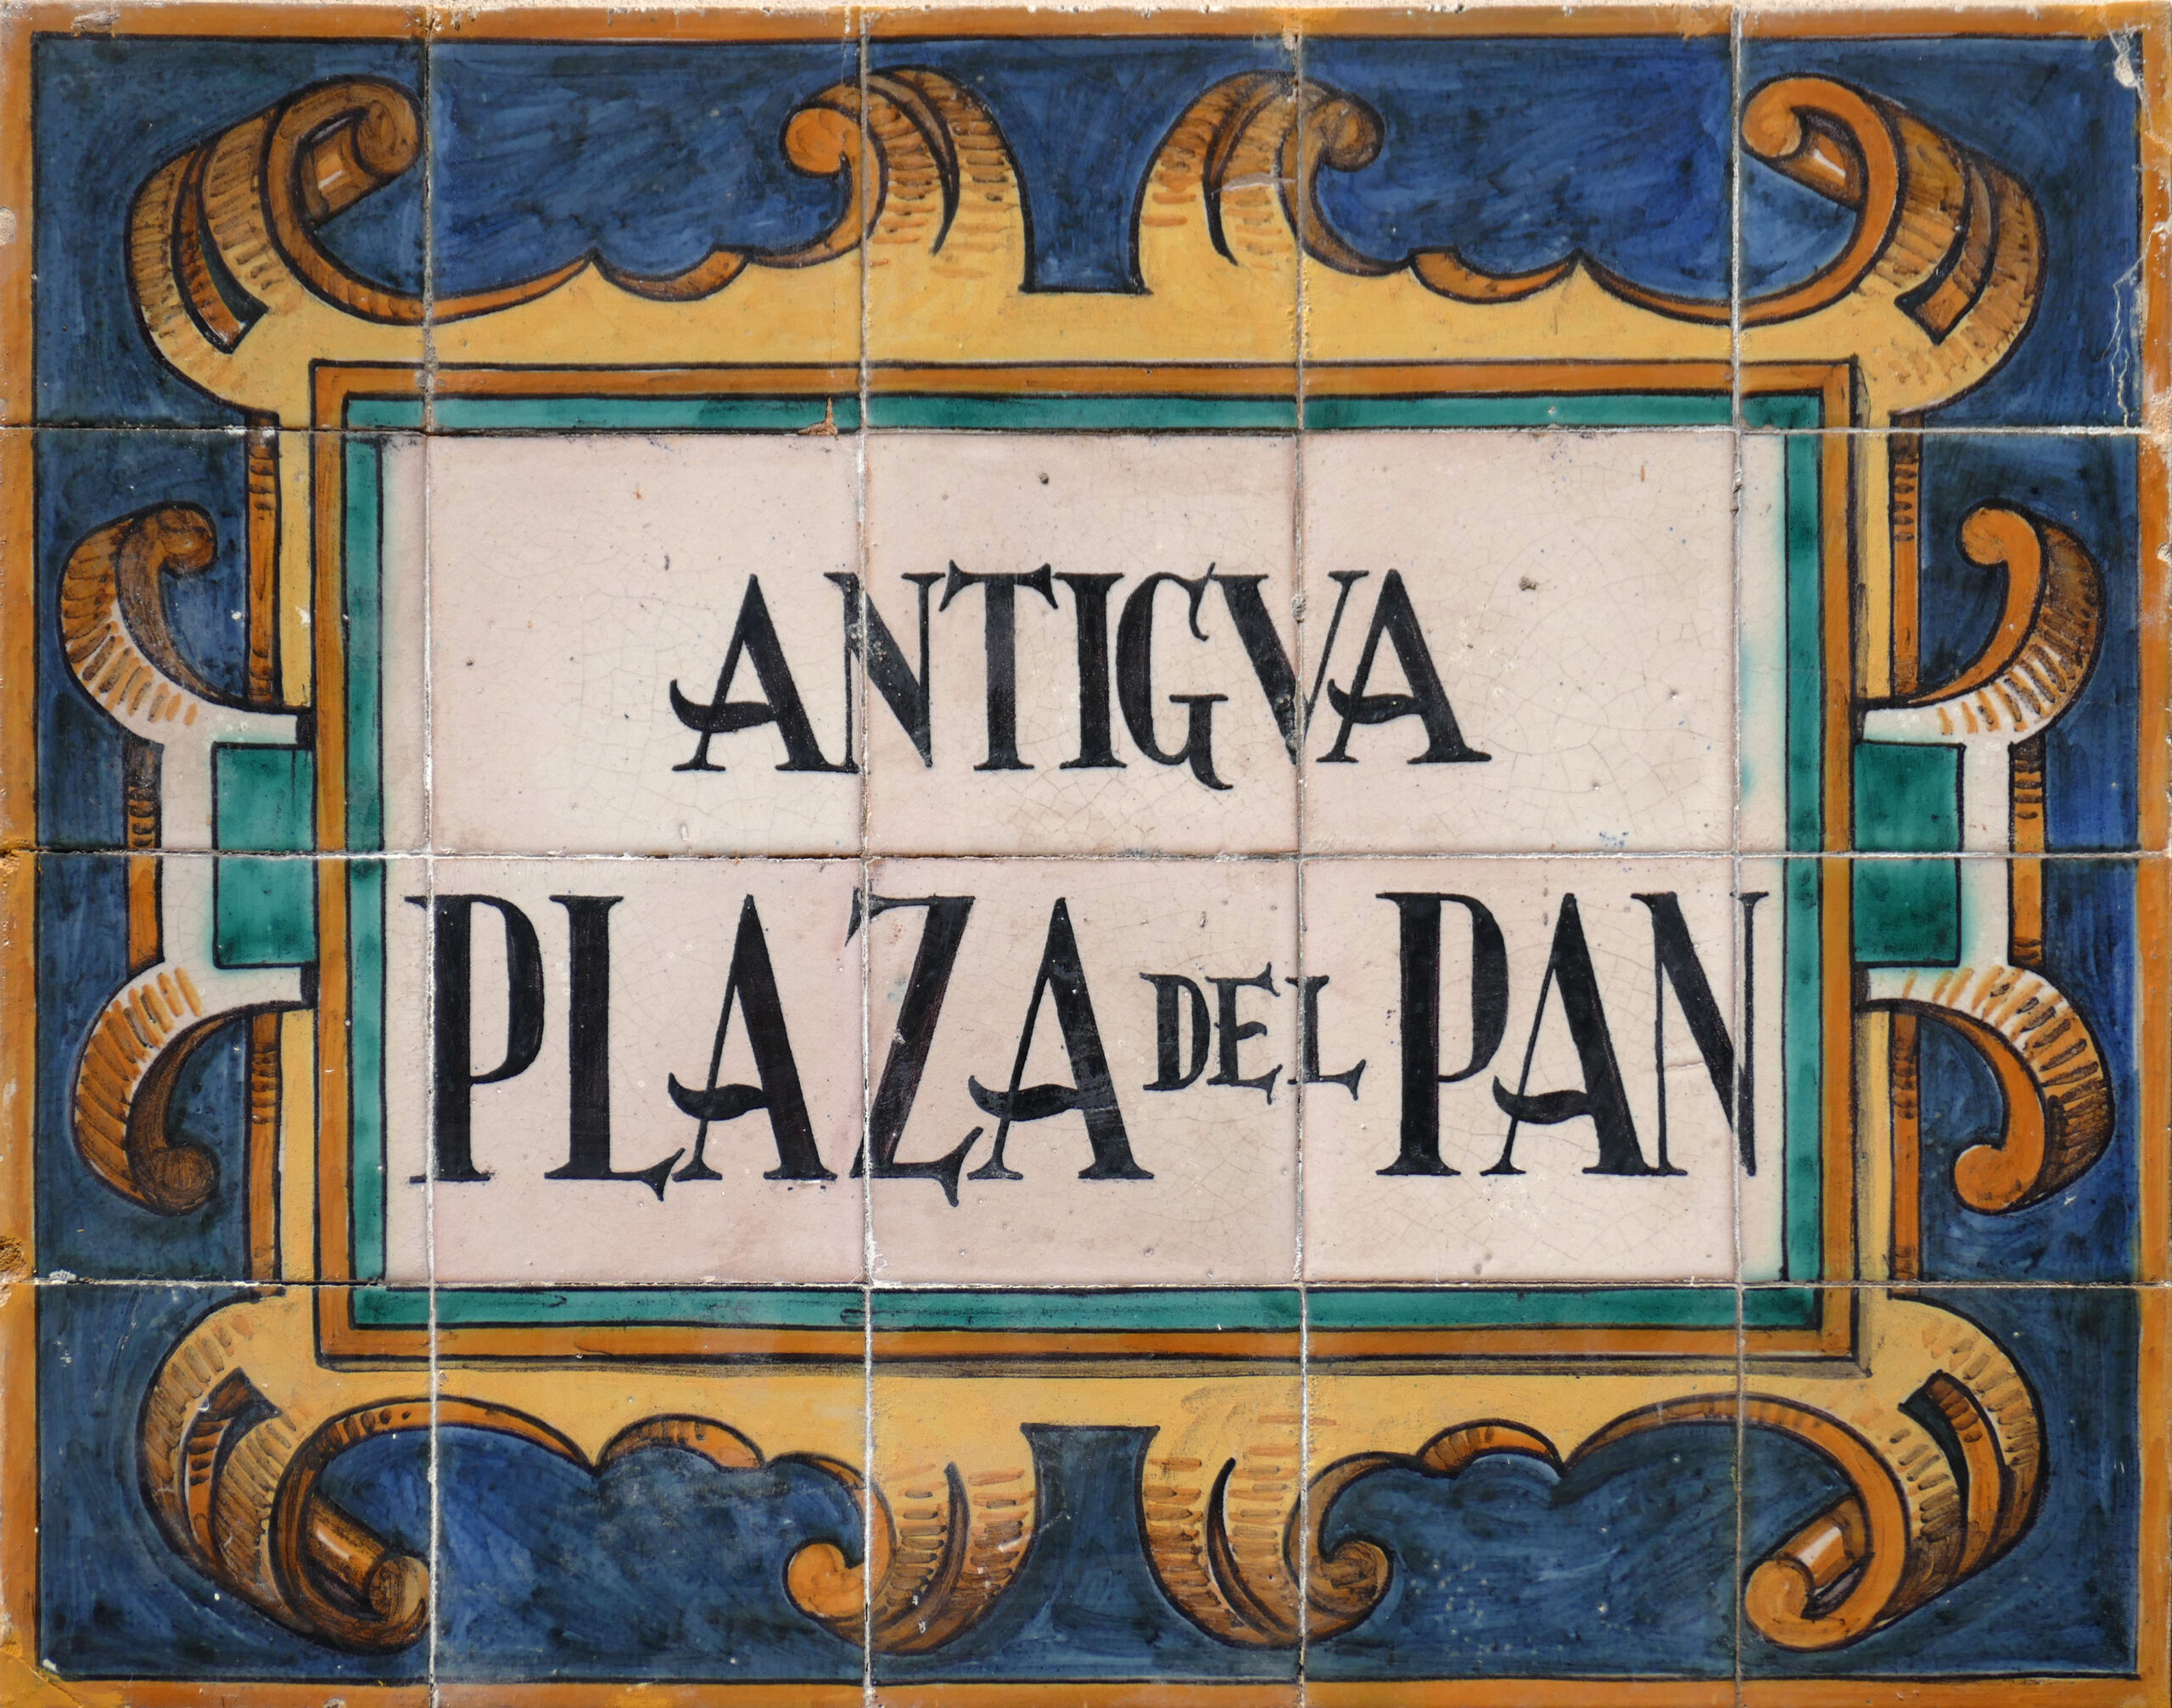 00994. Rótulo de la antigua plaza del Pan. Sevilla.